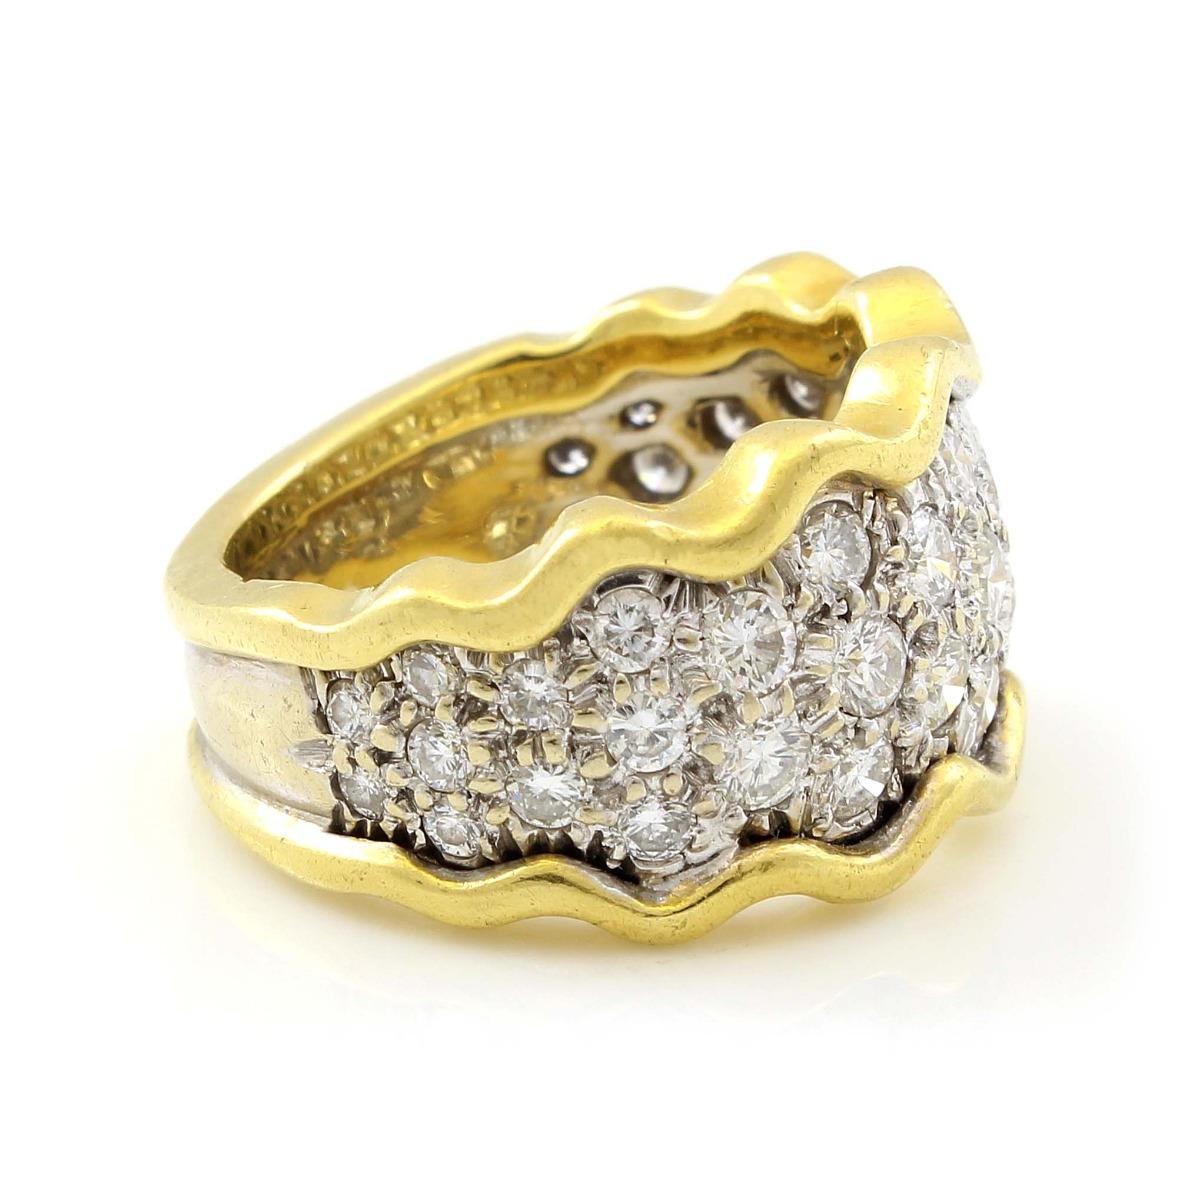 18K Yellow Gold 3CT Diamond Estate Band Ring

Metal: 18 K Yellow Gold
Gram Weight: 8.8  Grams
Diamond Carat Weight: 3 CTW 
Diamond Color: H-I
Diamond Clarity:  VSI1-VSI2
Diamond  Cut: Round-Shape
Finger Size: 4.5 (US-Scale)
Gemstone: N/A
Gemstone